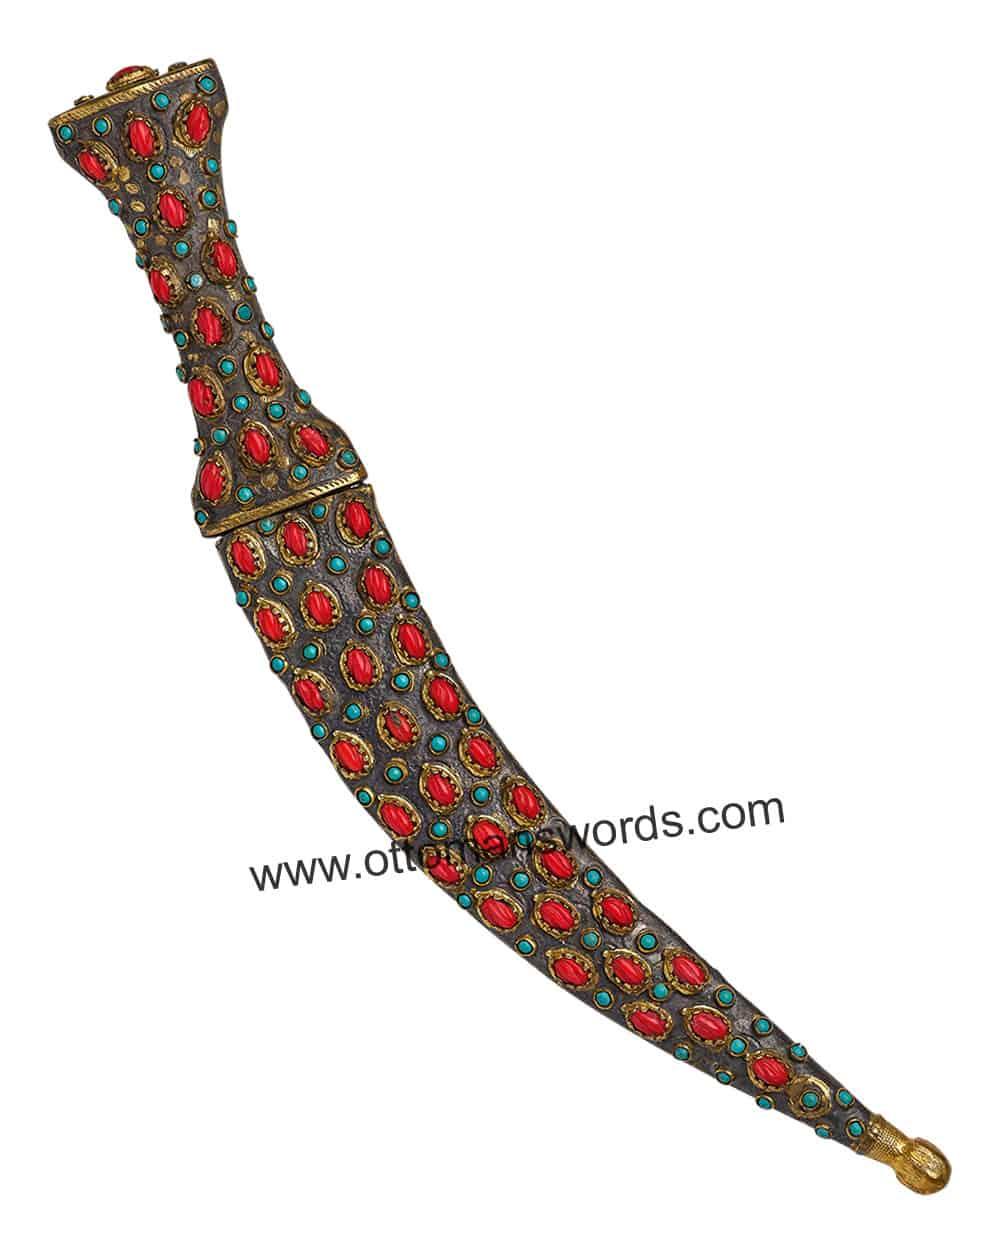 Ottoman Turkish Coral Dagger (4)